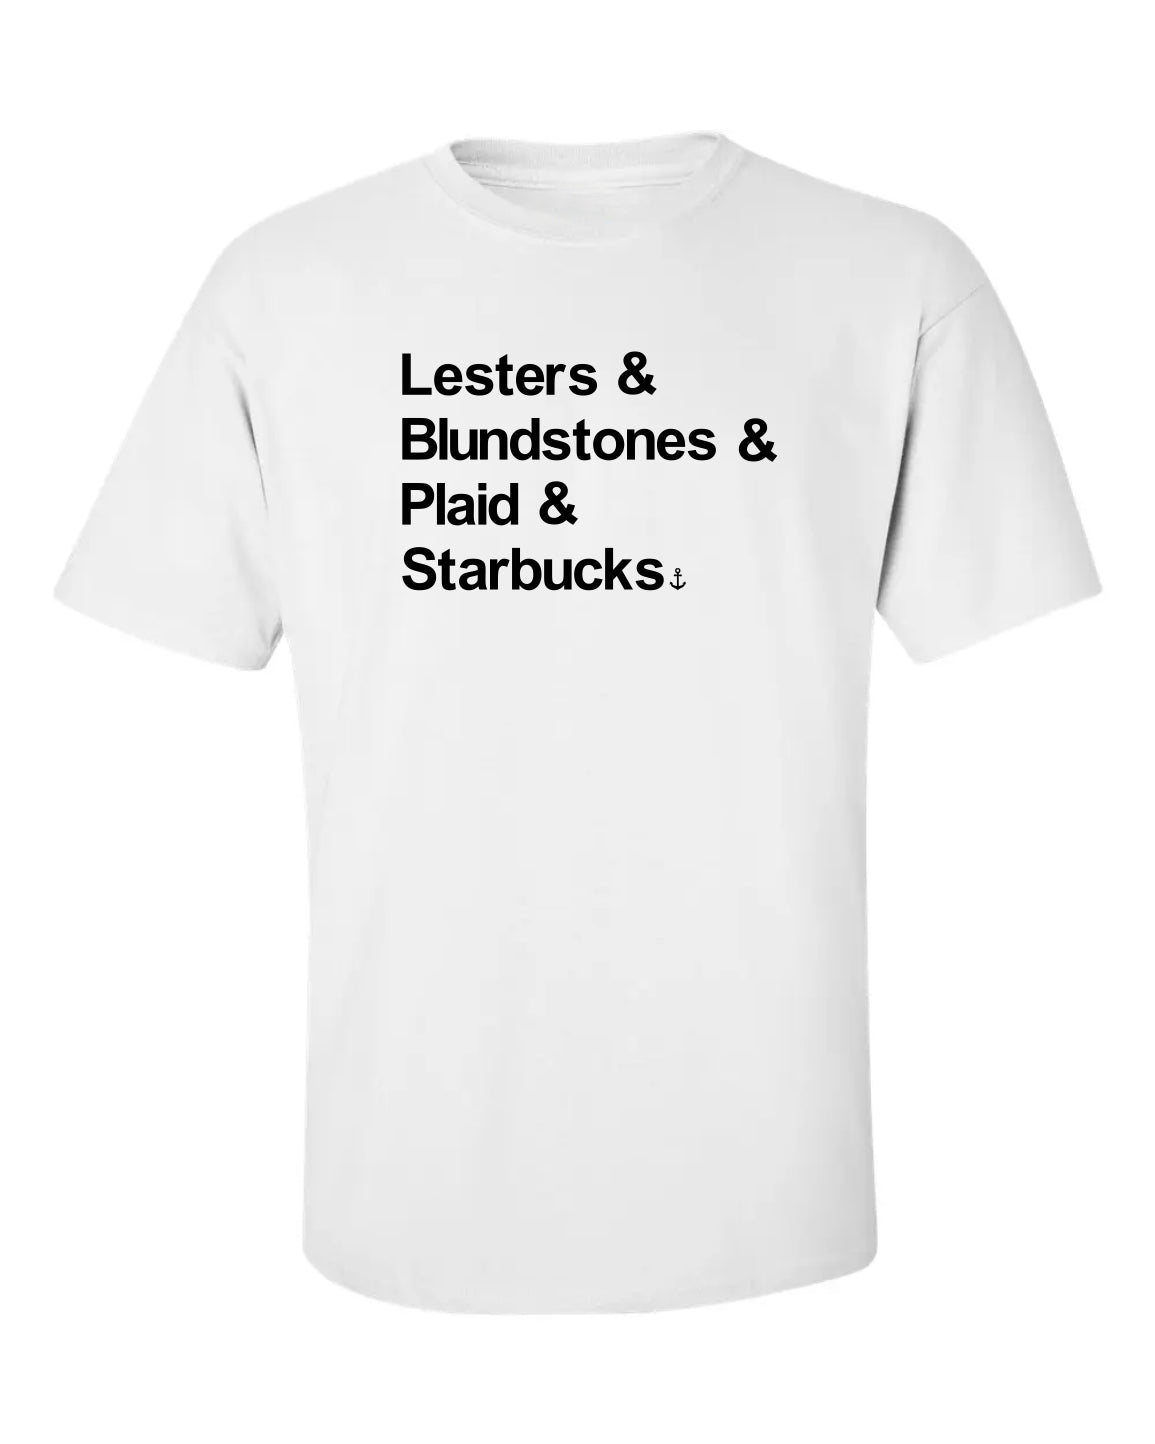 "Lesters" T-shirt